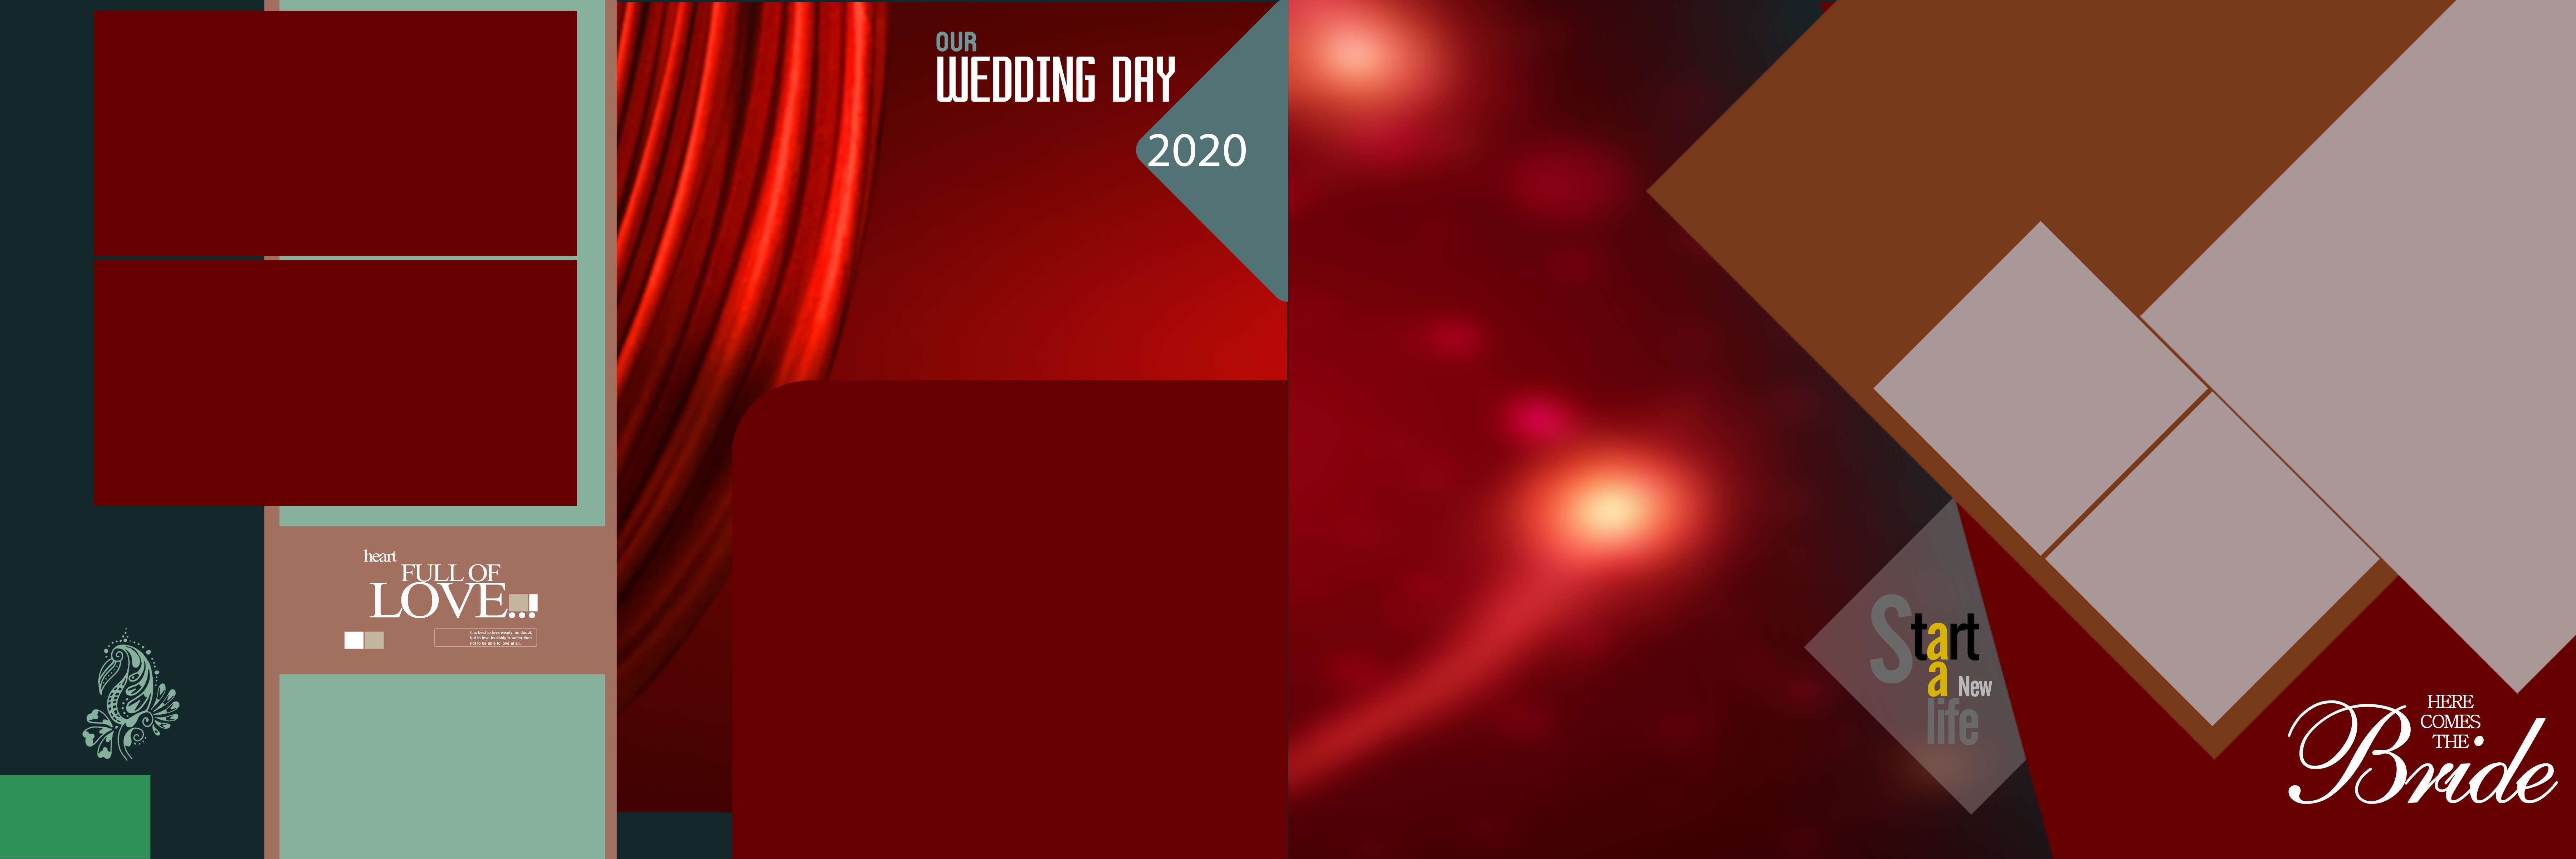 12X36 Wedding Album Design PSD Files Free Download 2021 